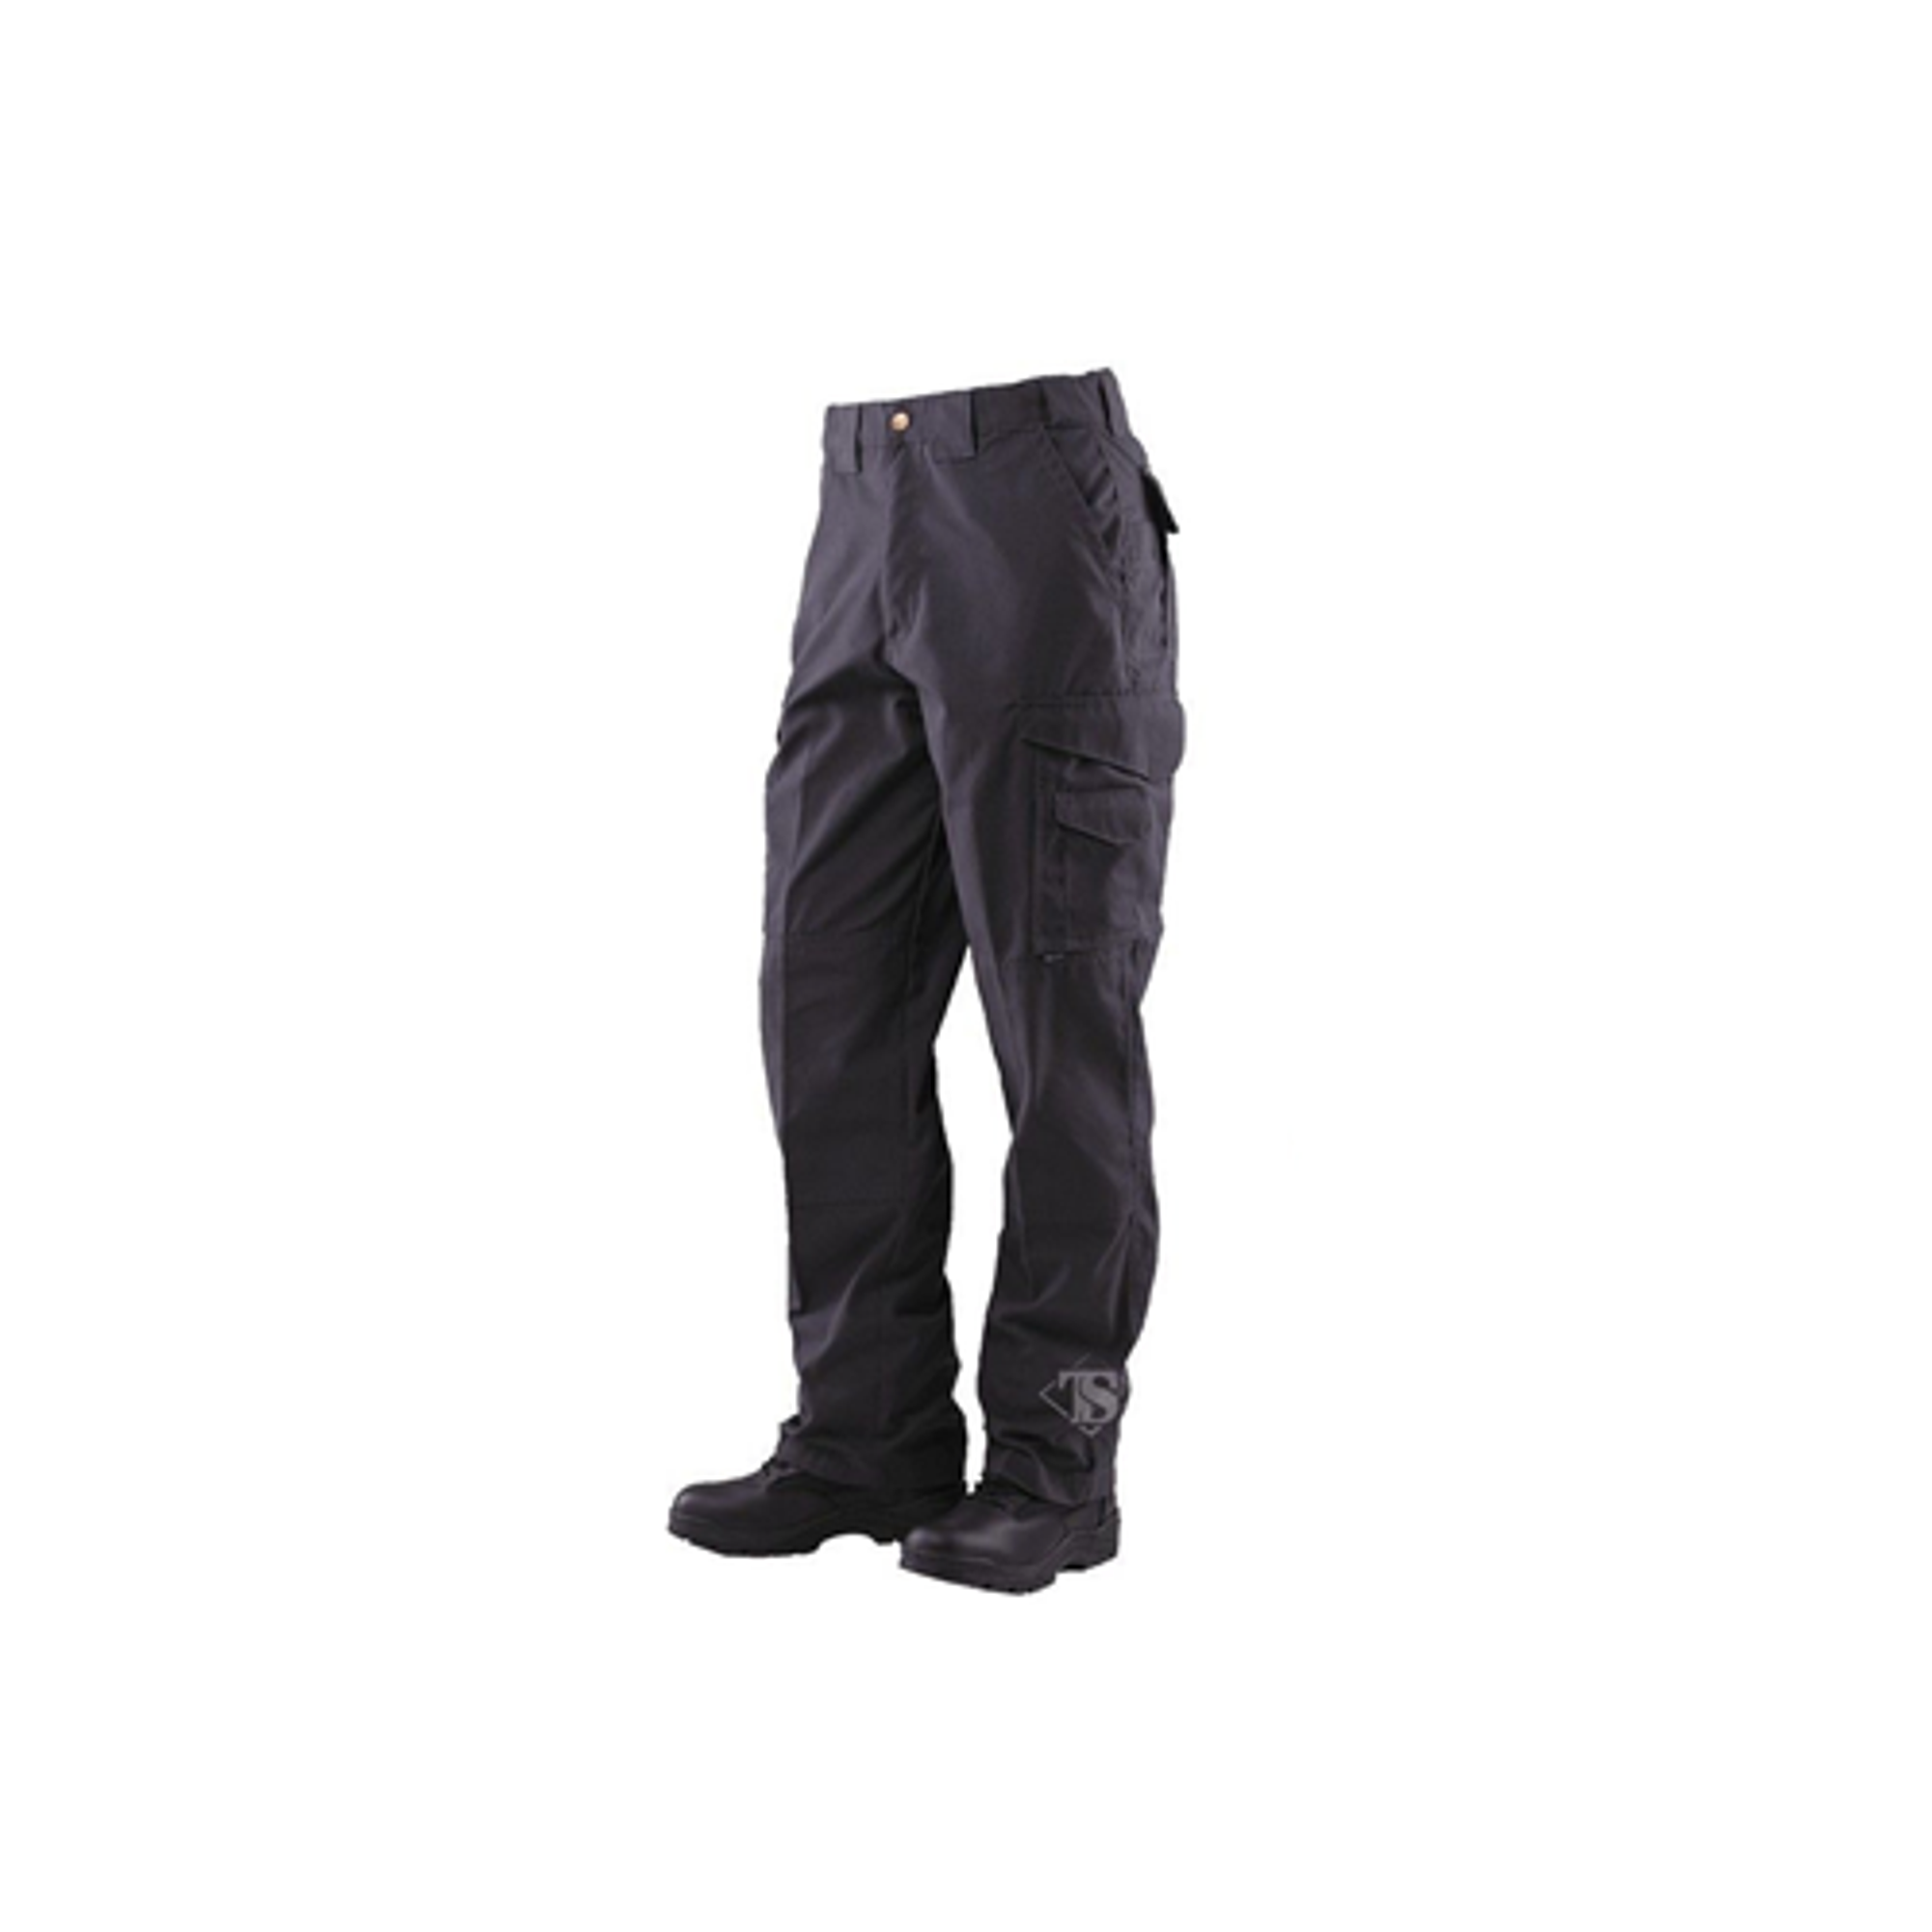 24-7 Original Tactical Pants - 6.5oz - Black - KRTSP-1062007